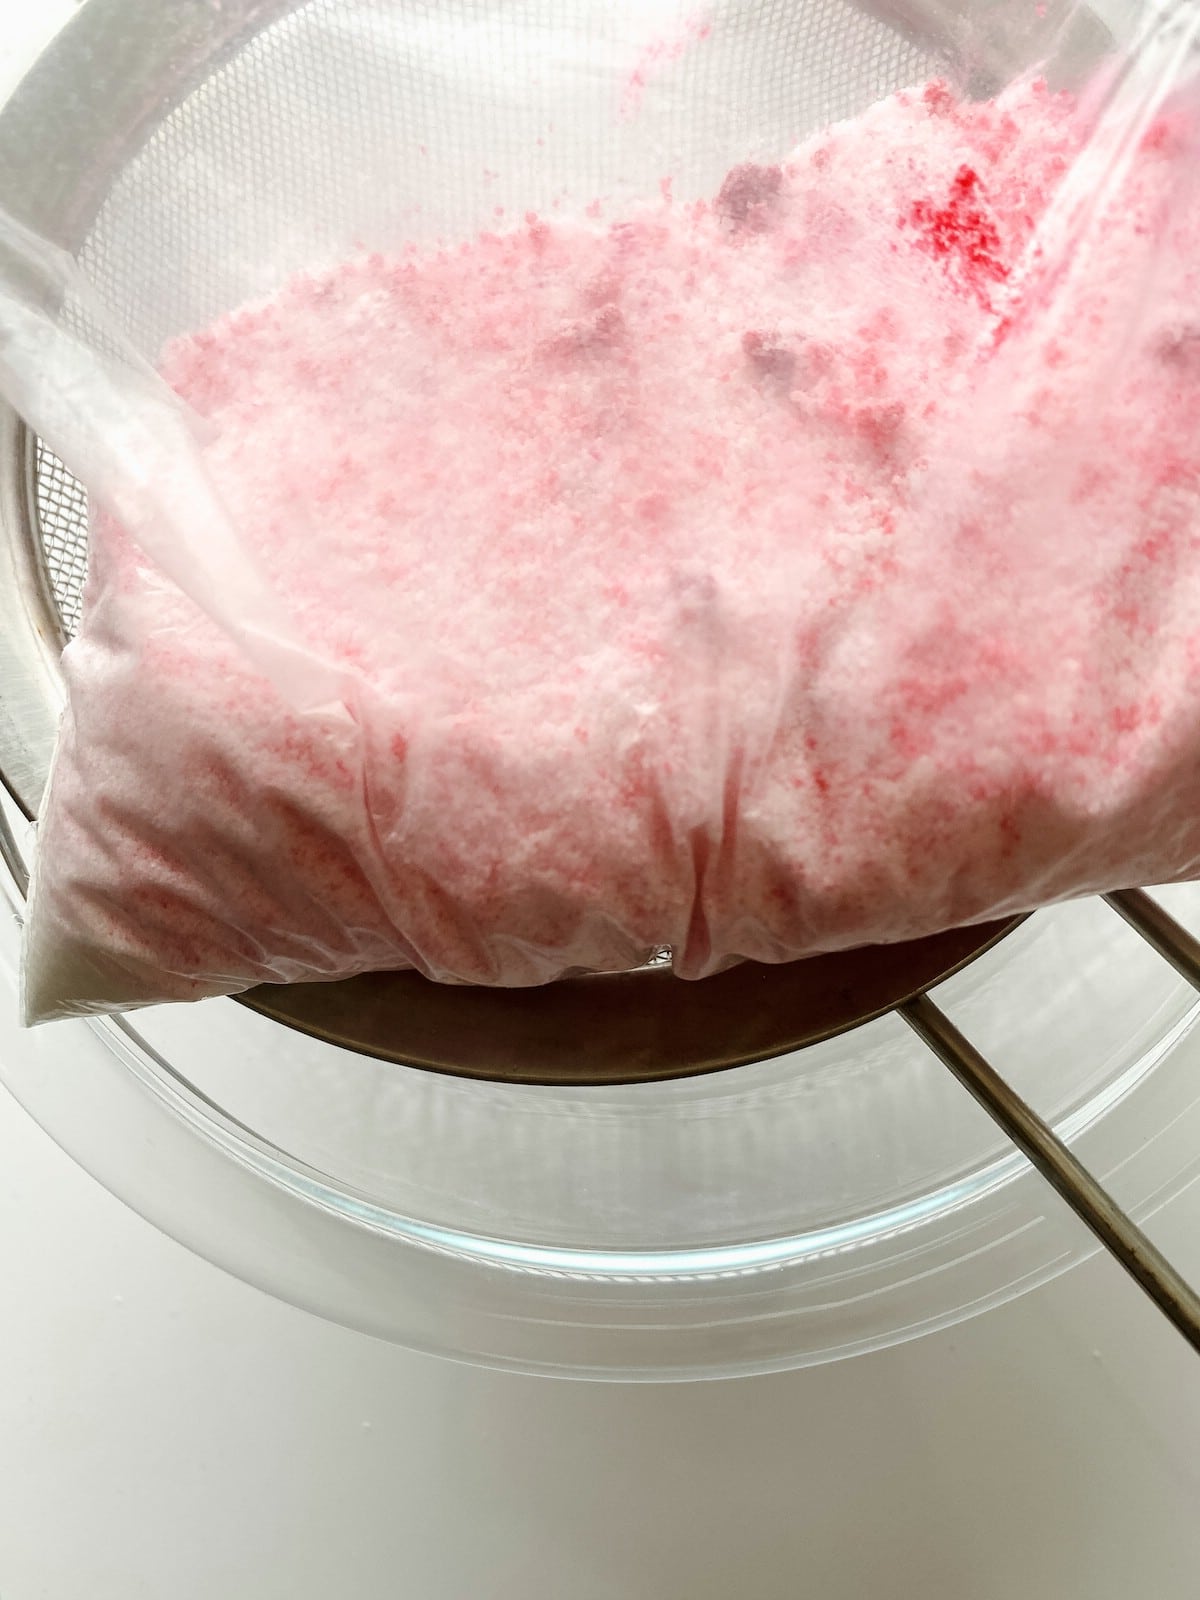 Sugar with pink color in Ziploc bag